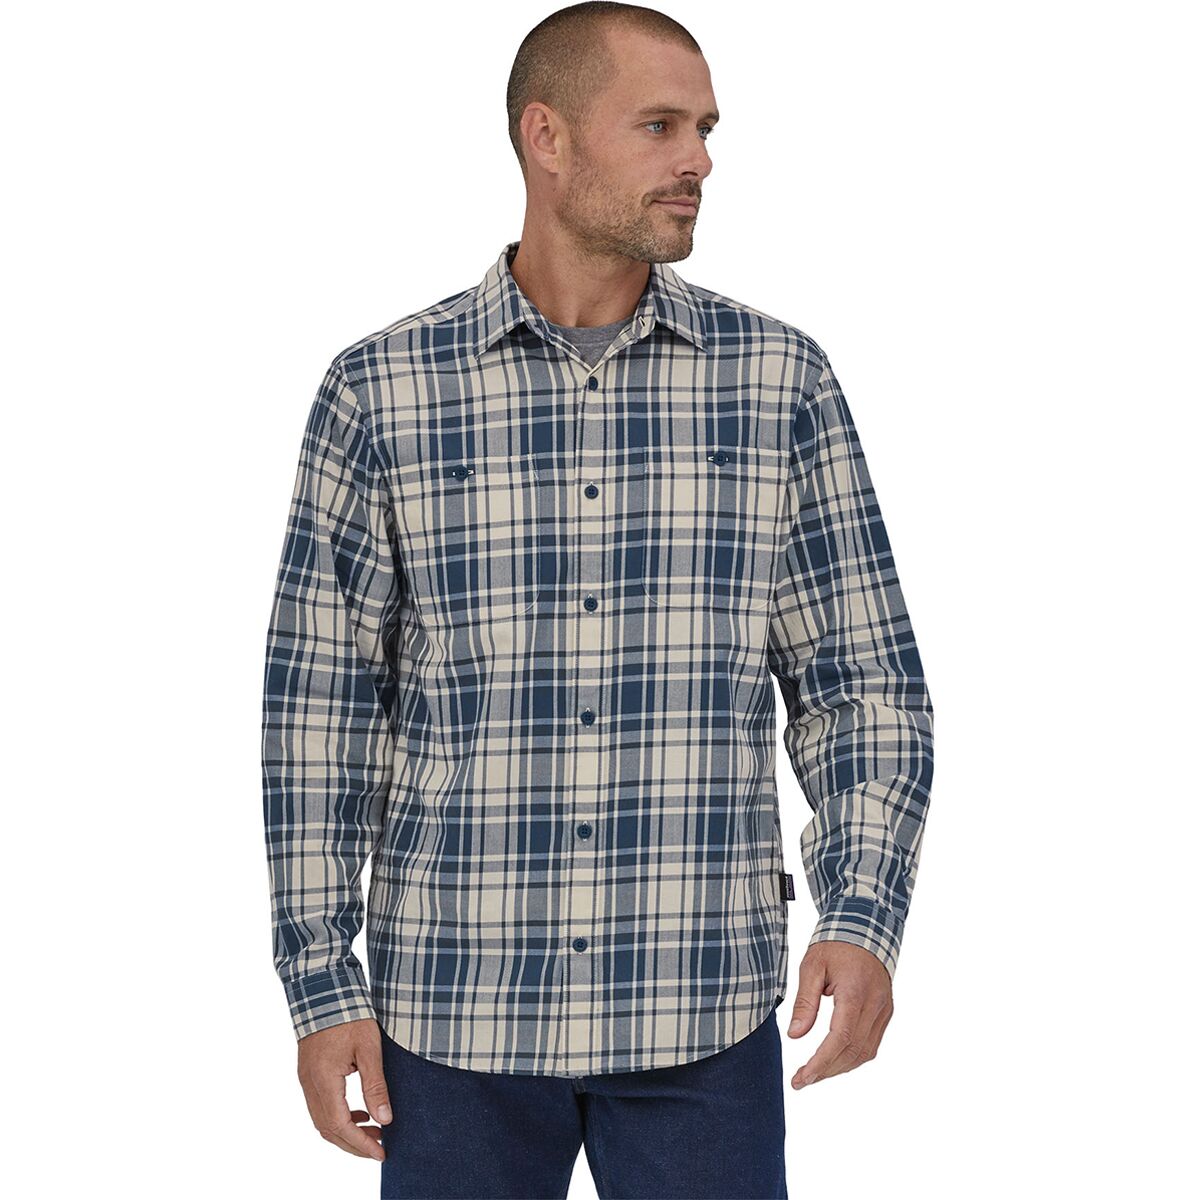 Patagonia Pima Cotton Long-Sleeve Shirt - Men's